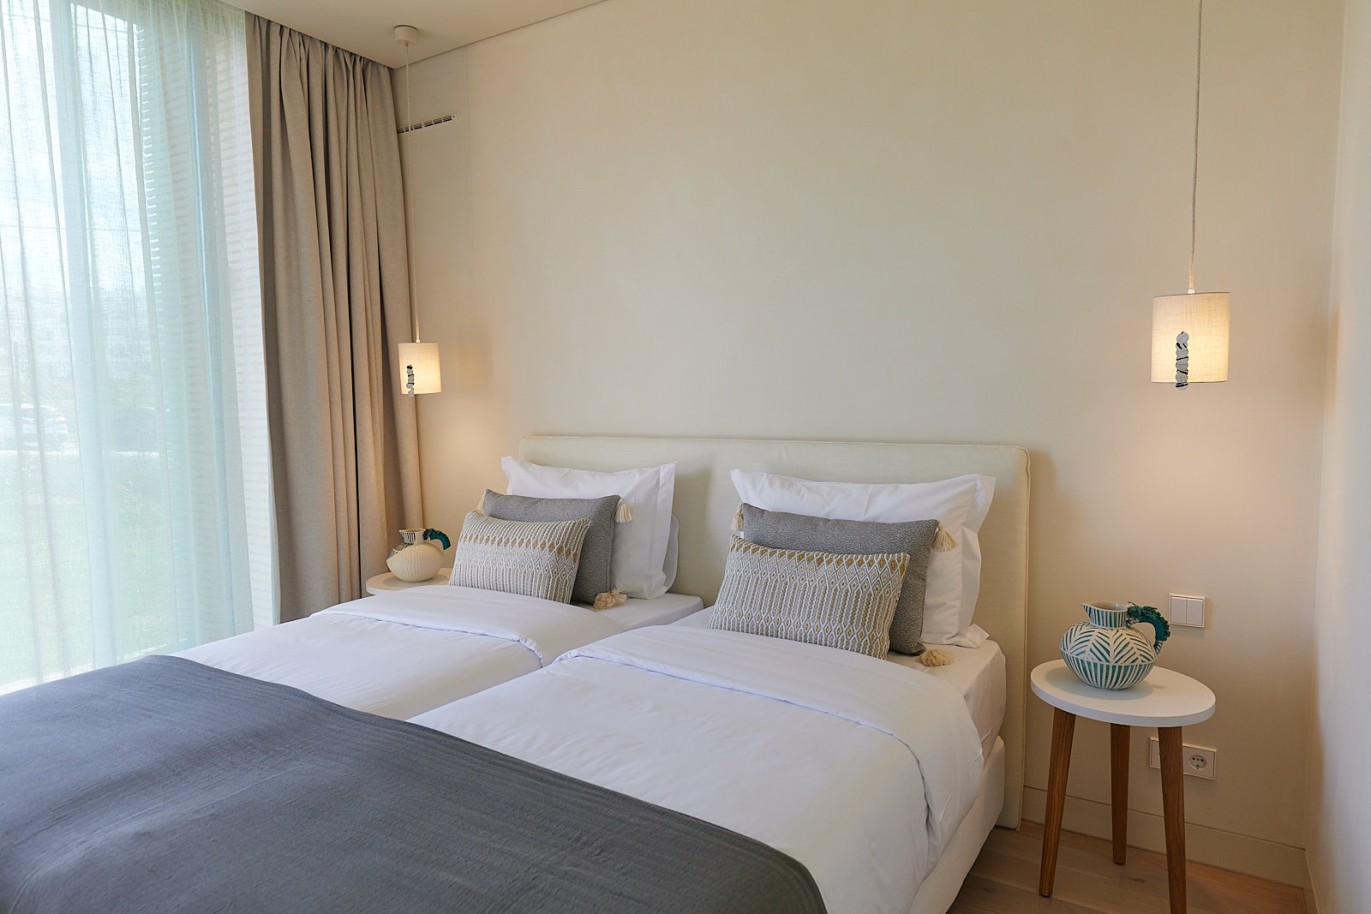 2 bedroom apartment in resort, for sale in Porches, Algarve_229155